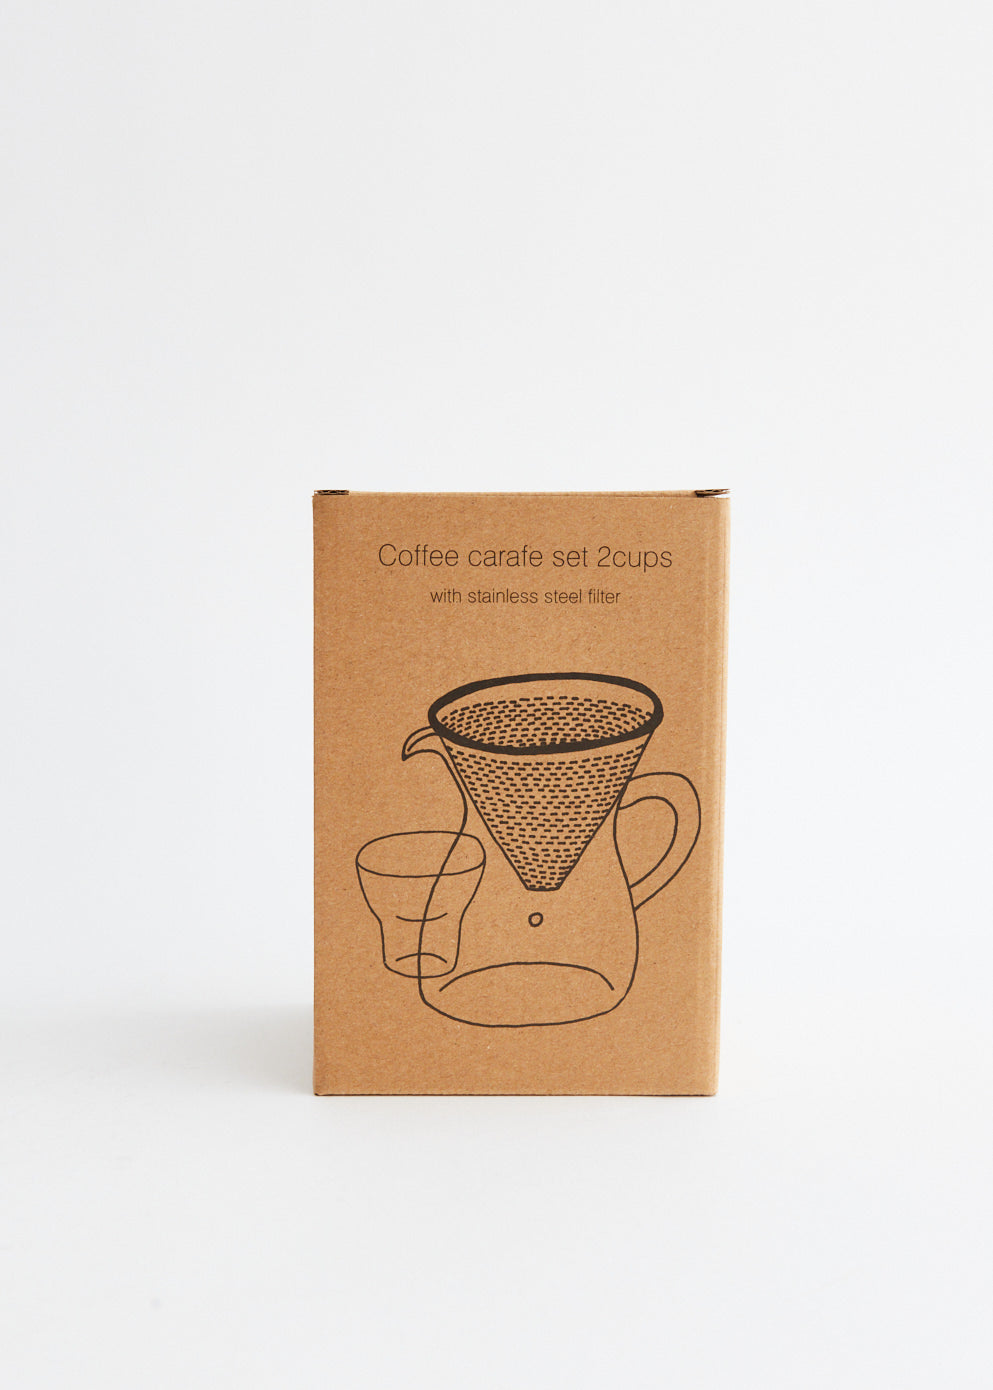 SCS coffee carafe set 300ml – KINTO USA, Inc